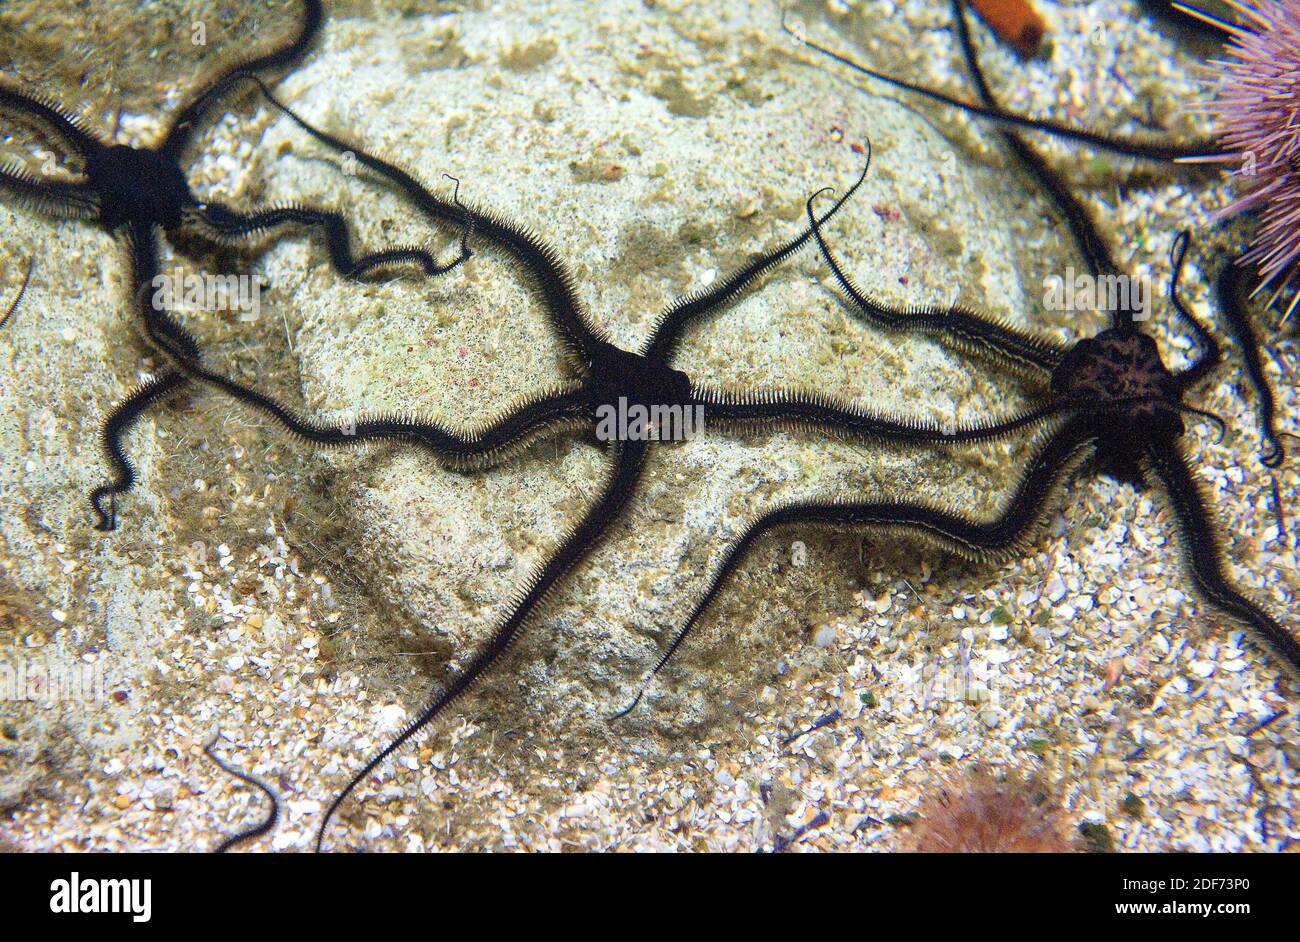 Black brittle star (Ophiocomina nigra) is a amnivore brittle star native to Mediterranean Sea and eastern Atlantic Ocean. Stock Photo